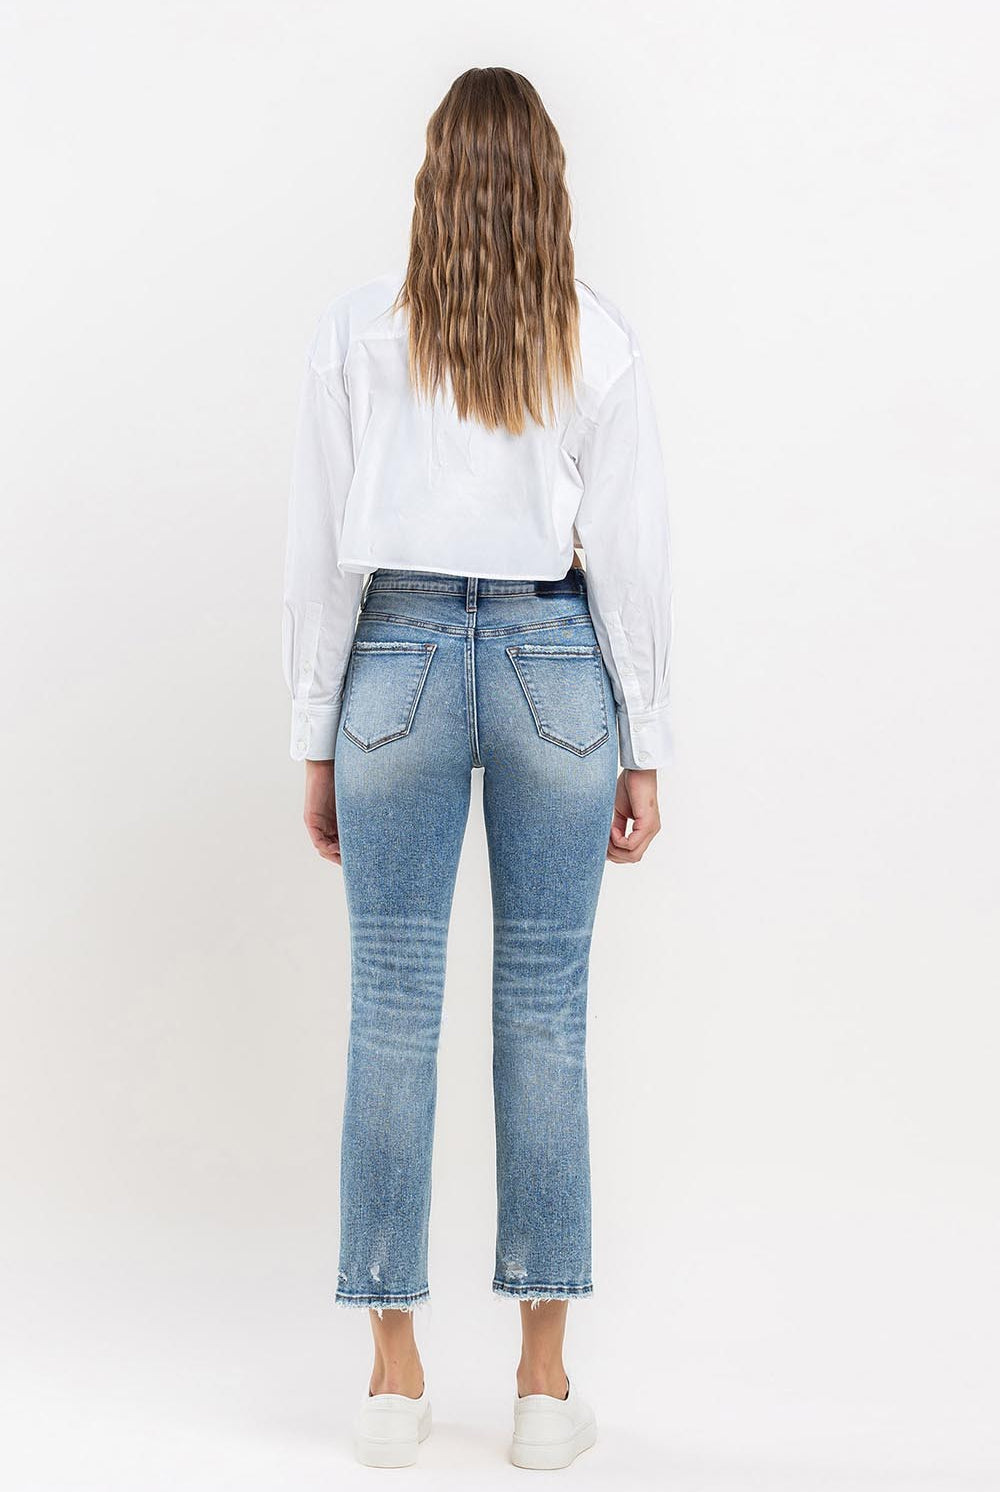 Women's Lovervet distressed jeans.